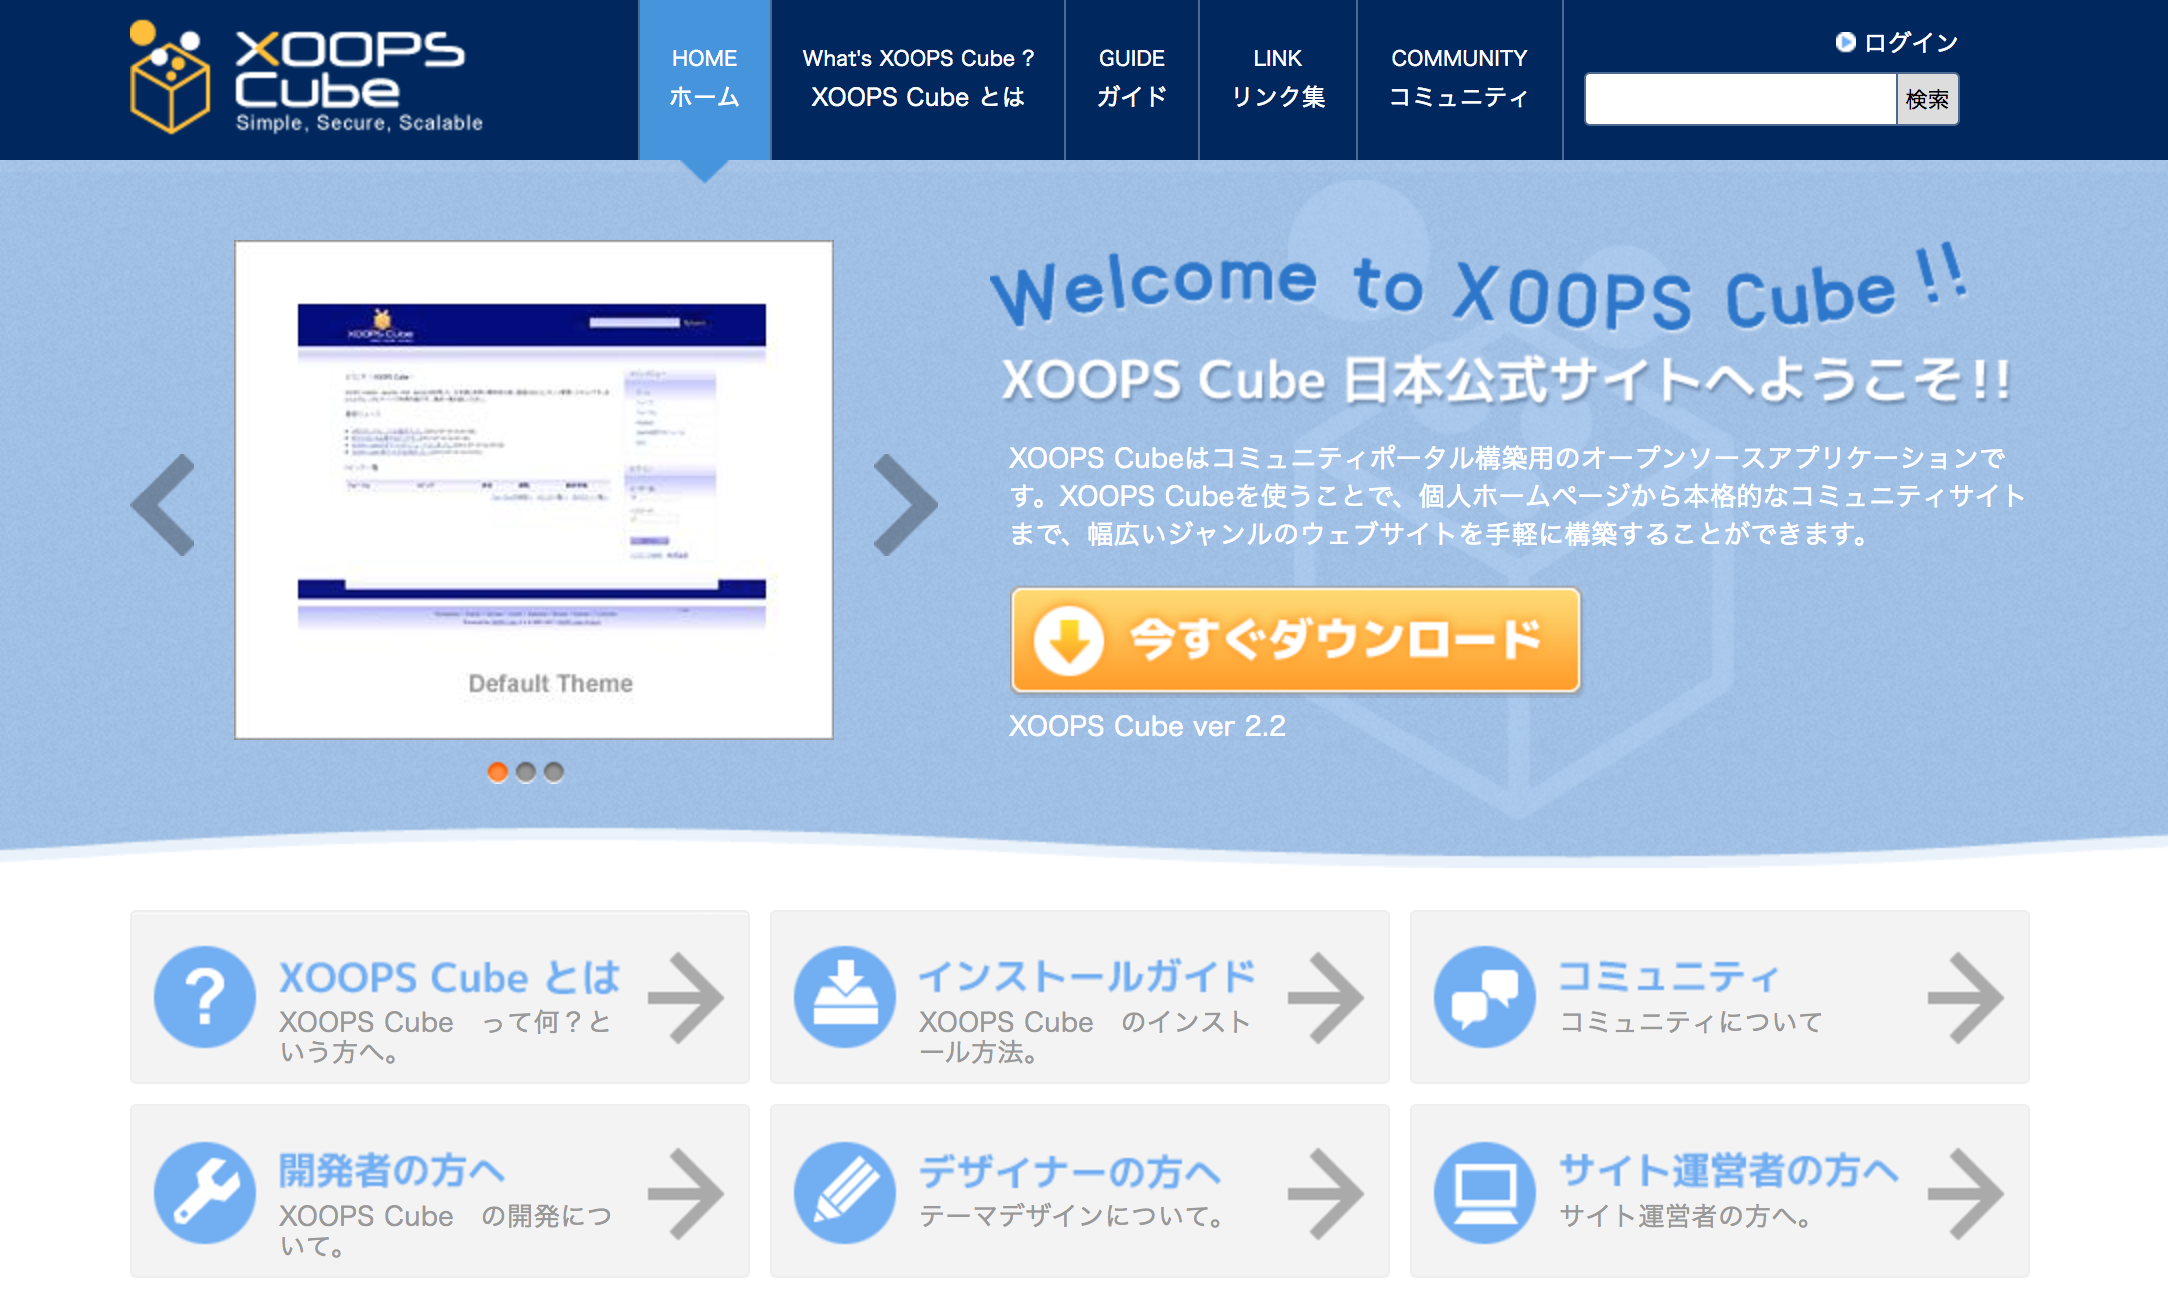 「XOOPS Cube日本」のサイト